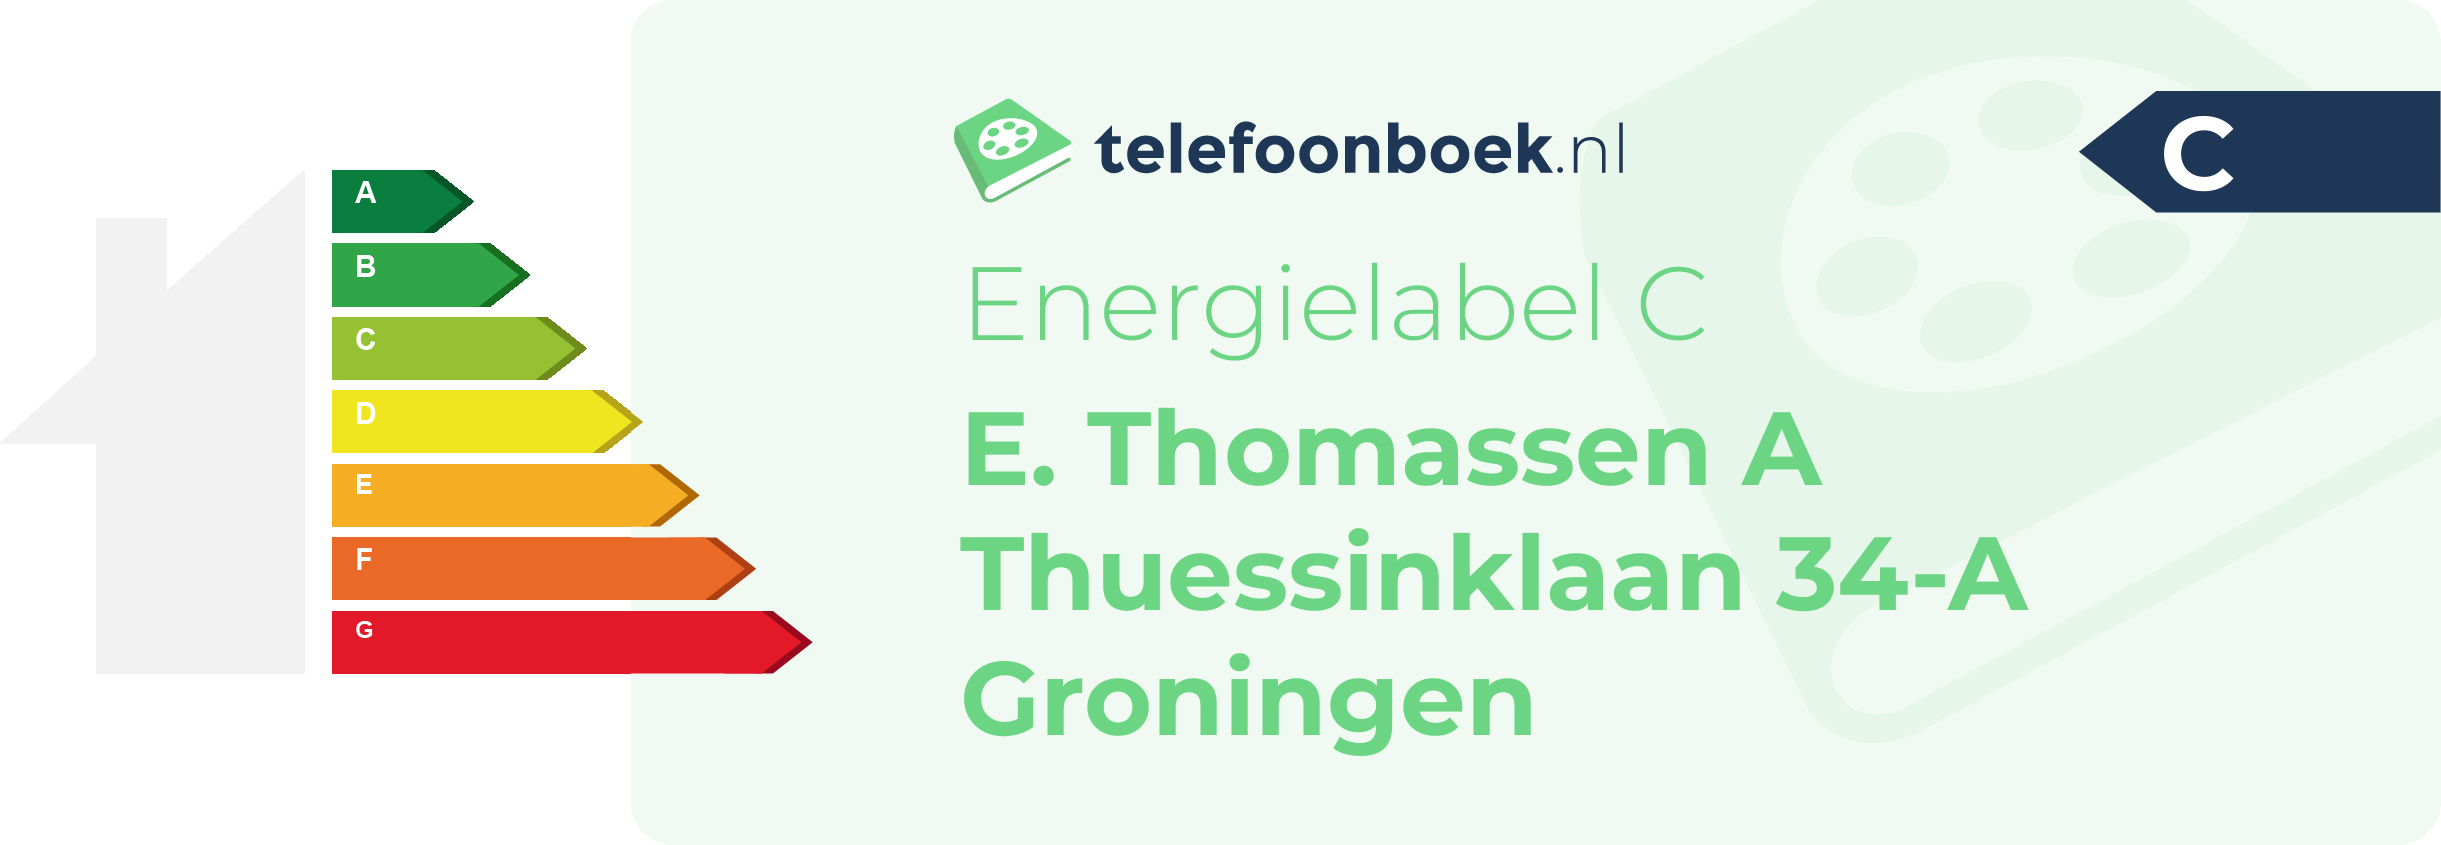 Energielabel E. Thomassen A Thuessinklaan 34-A Groningen